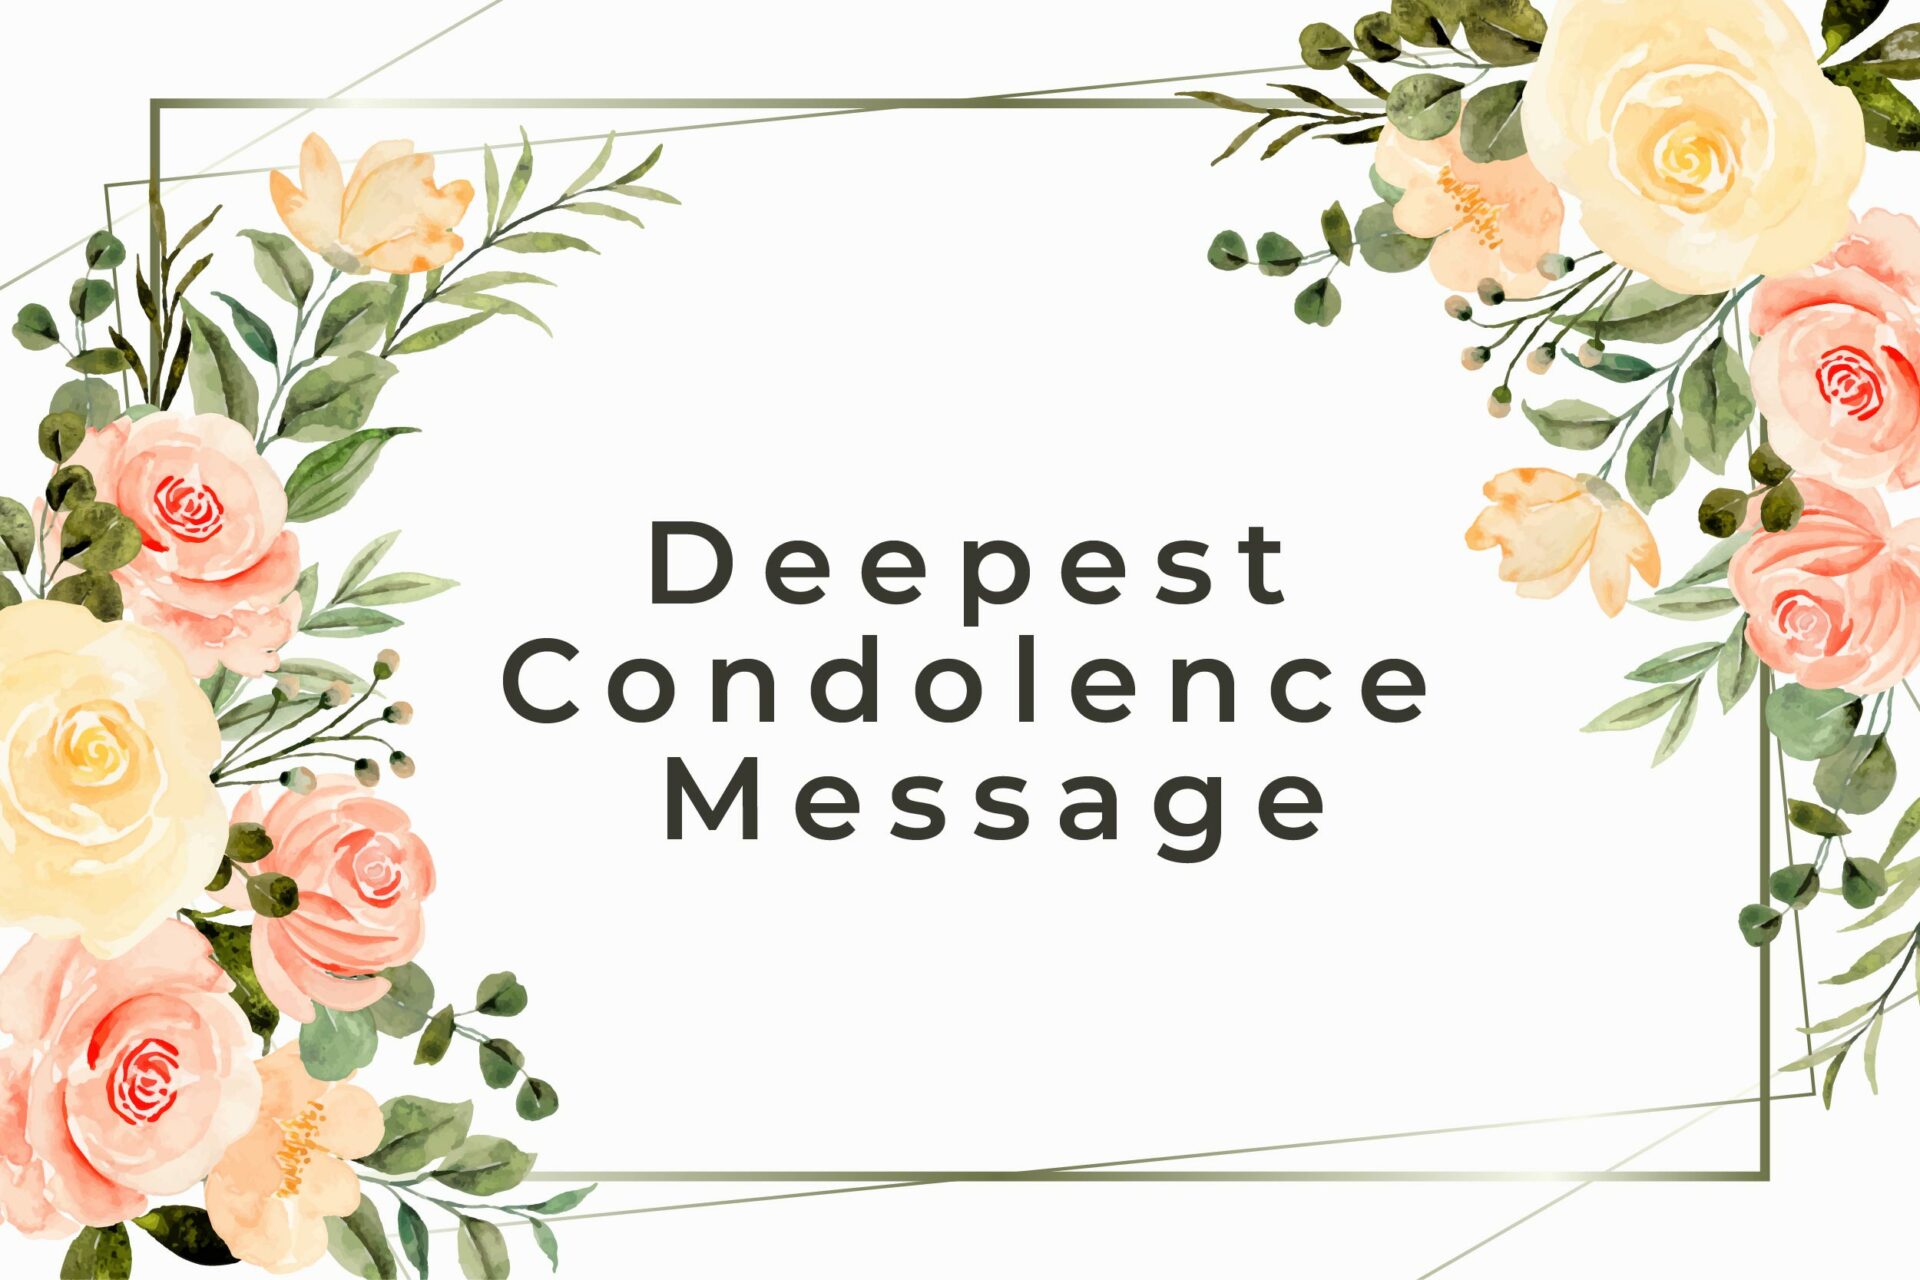 Deepest condolence message